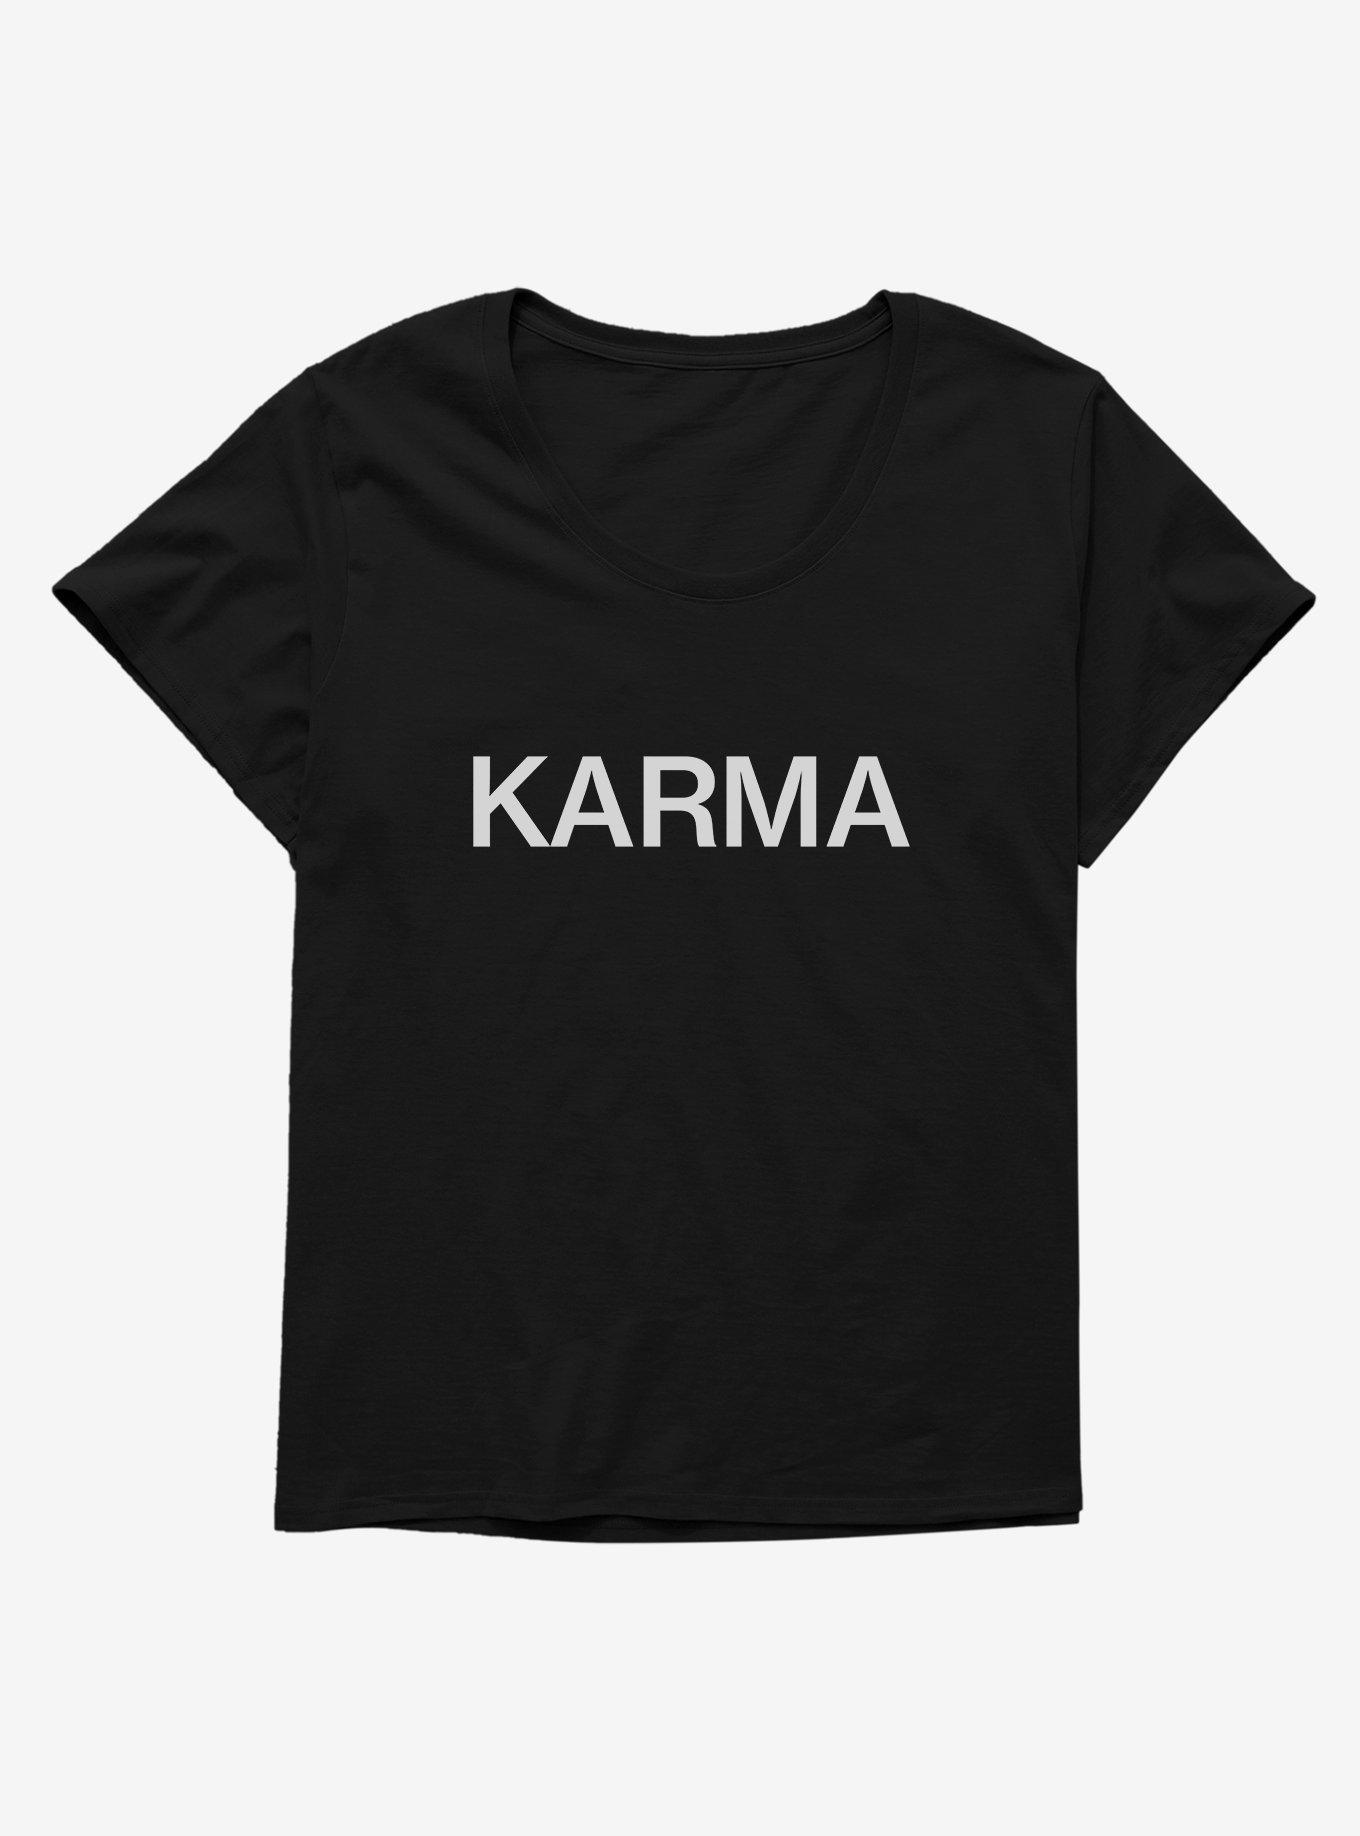 Karma Text Womens T-Shirt Plus Size, , hi-res